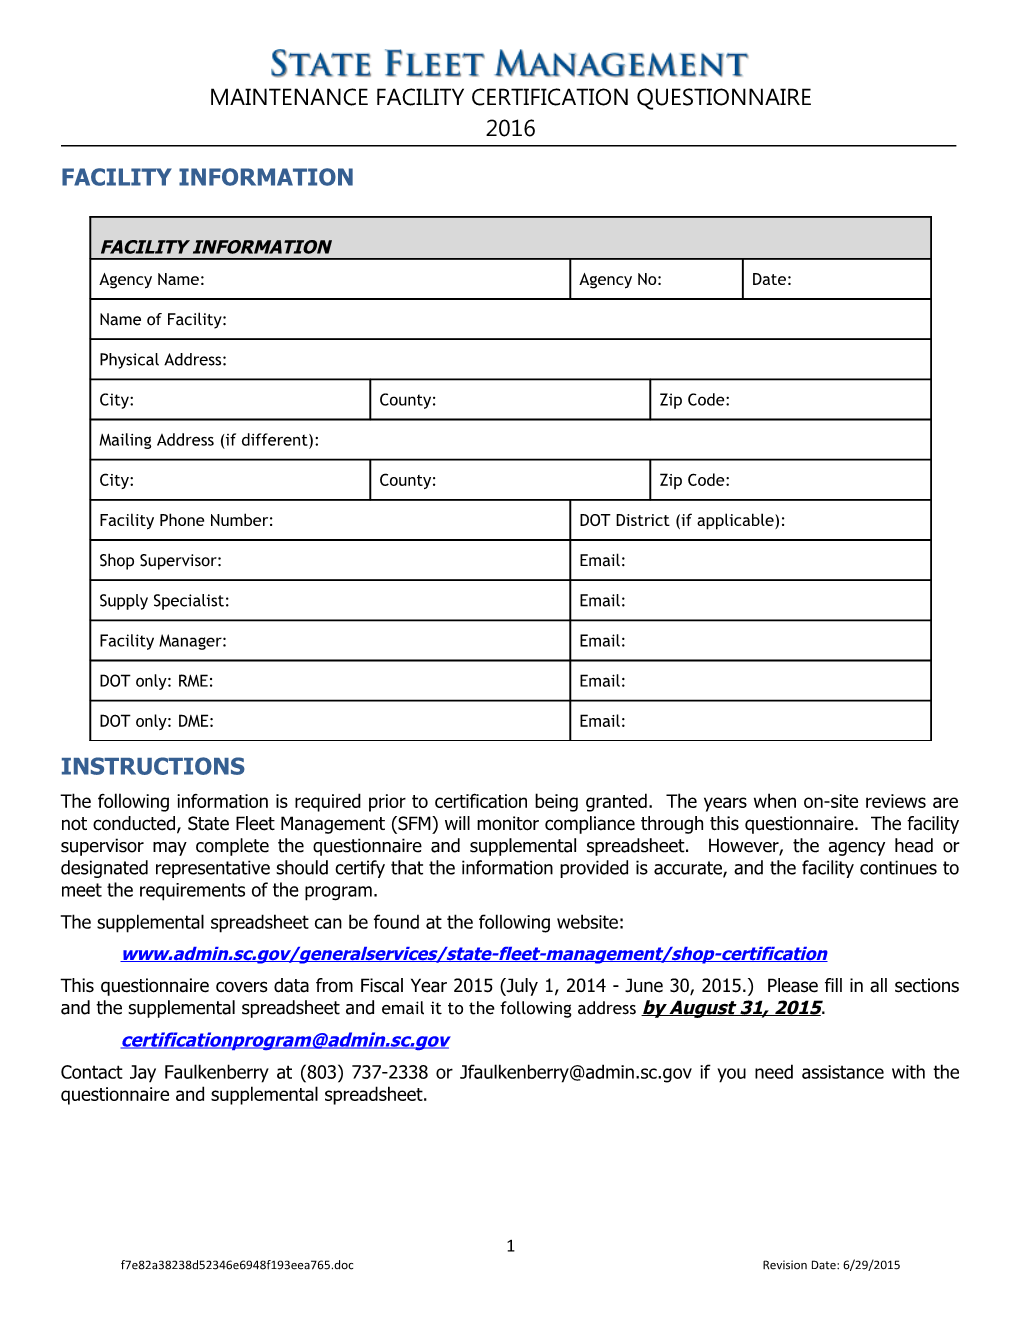 Maintenance Facility Certification Questionnaire